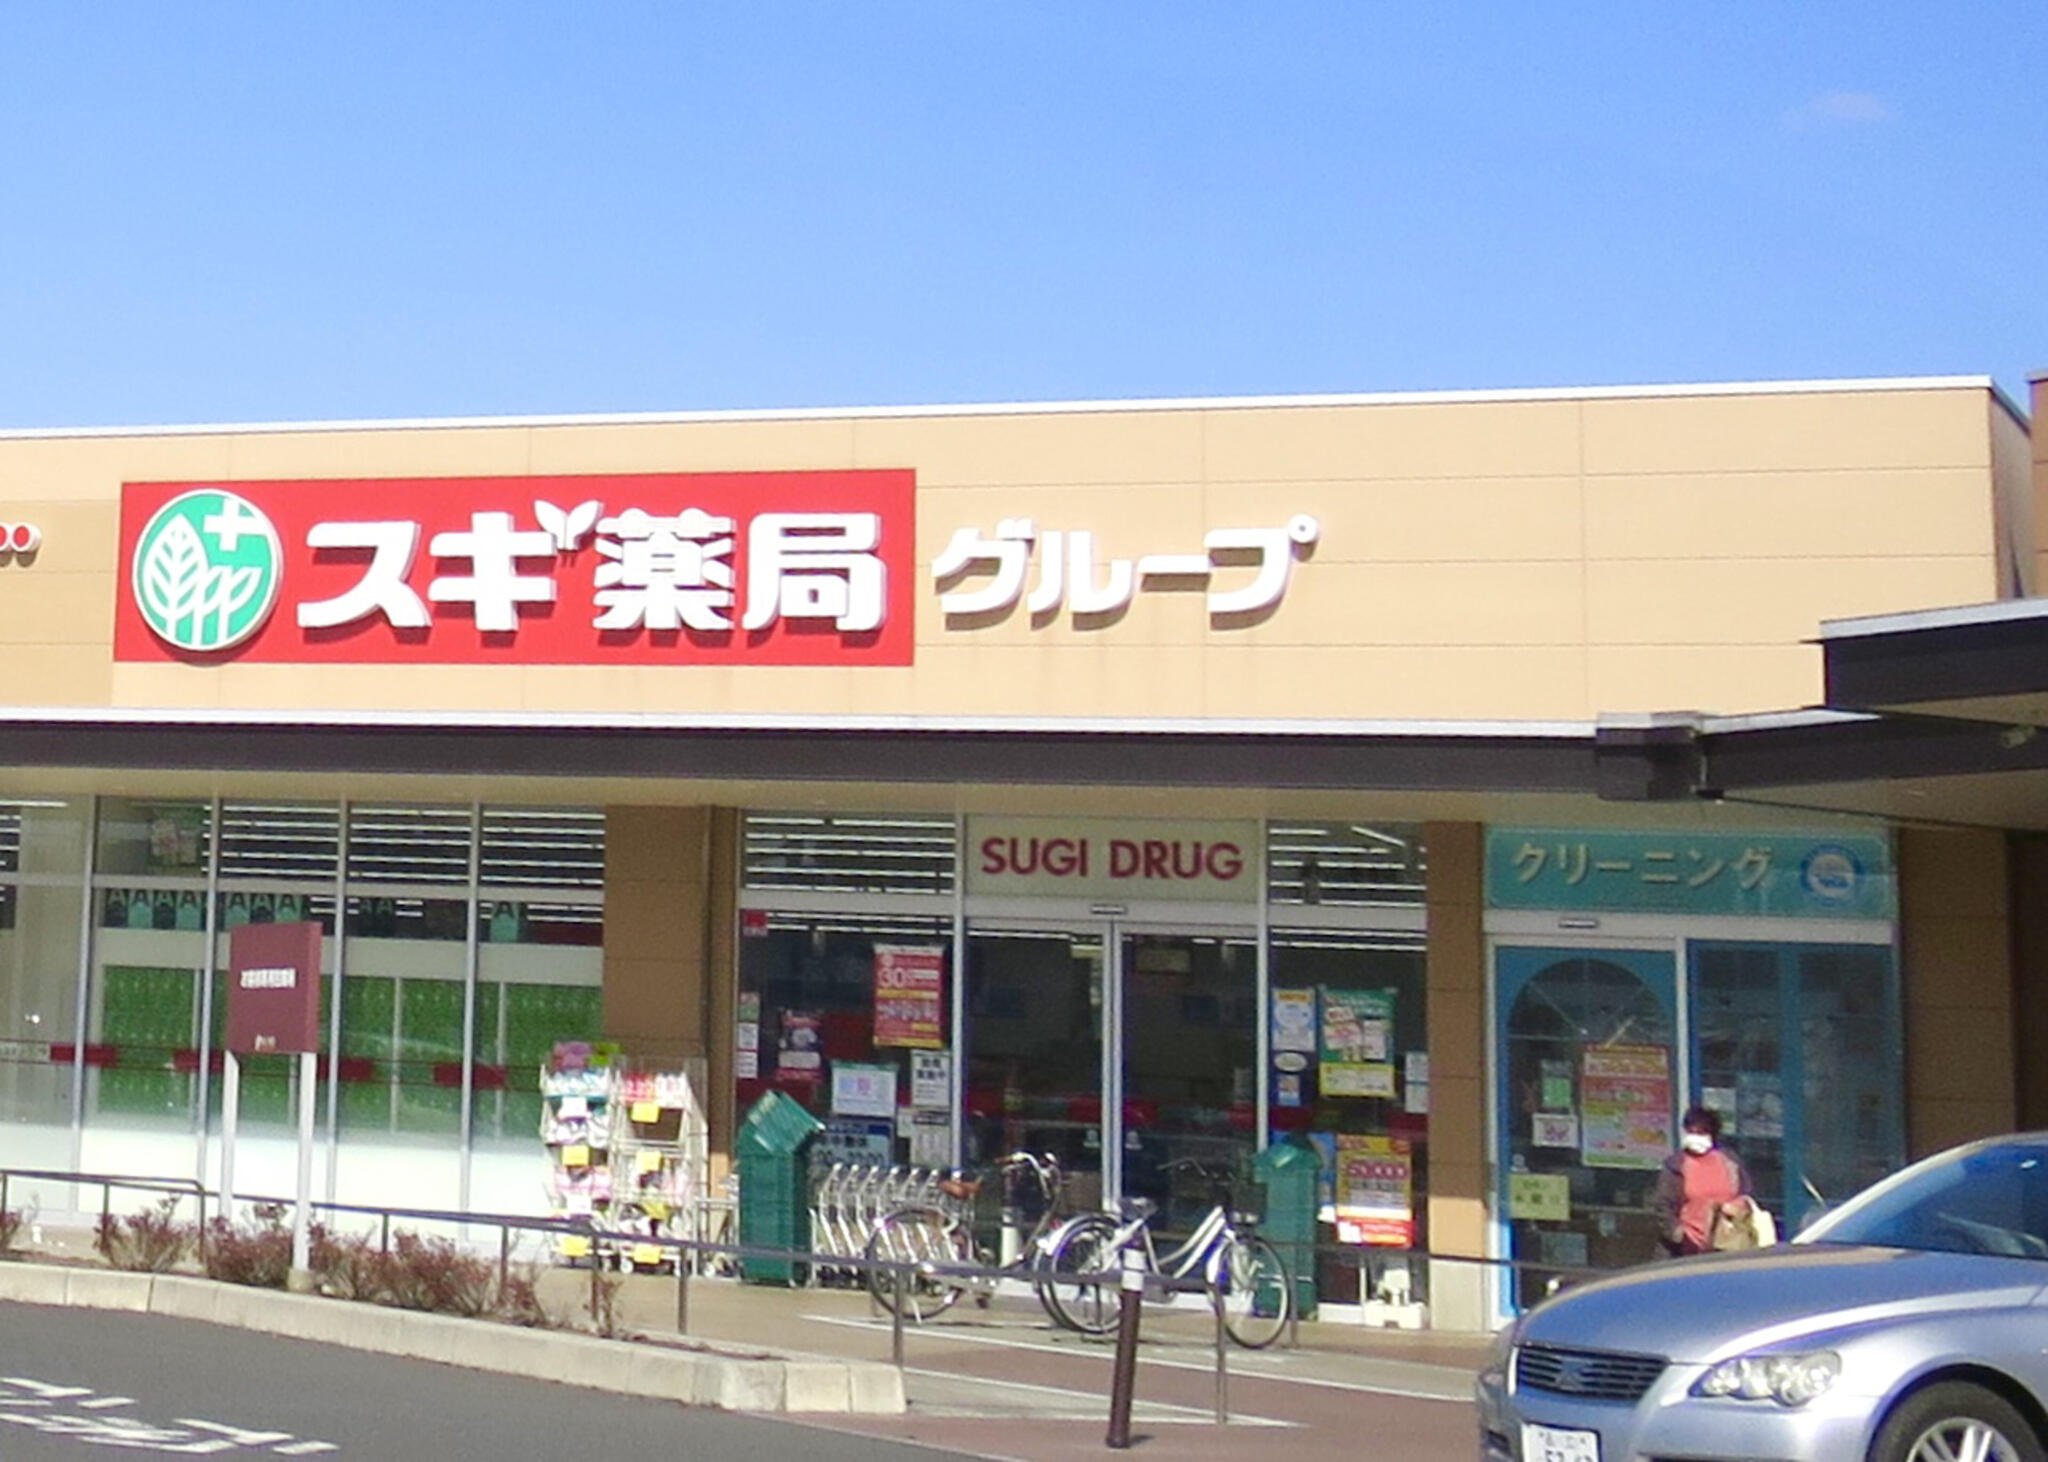 スギ薬局 東松山新宿町店の代表写真4